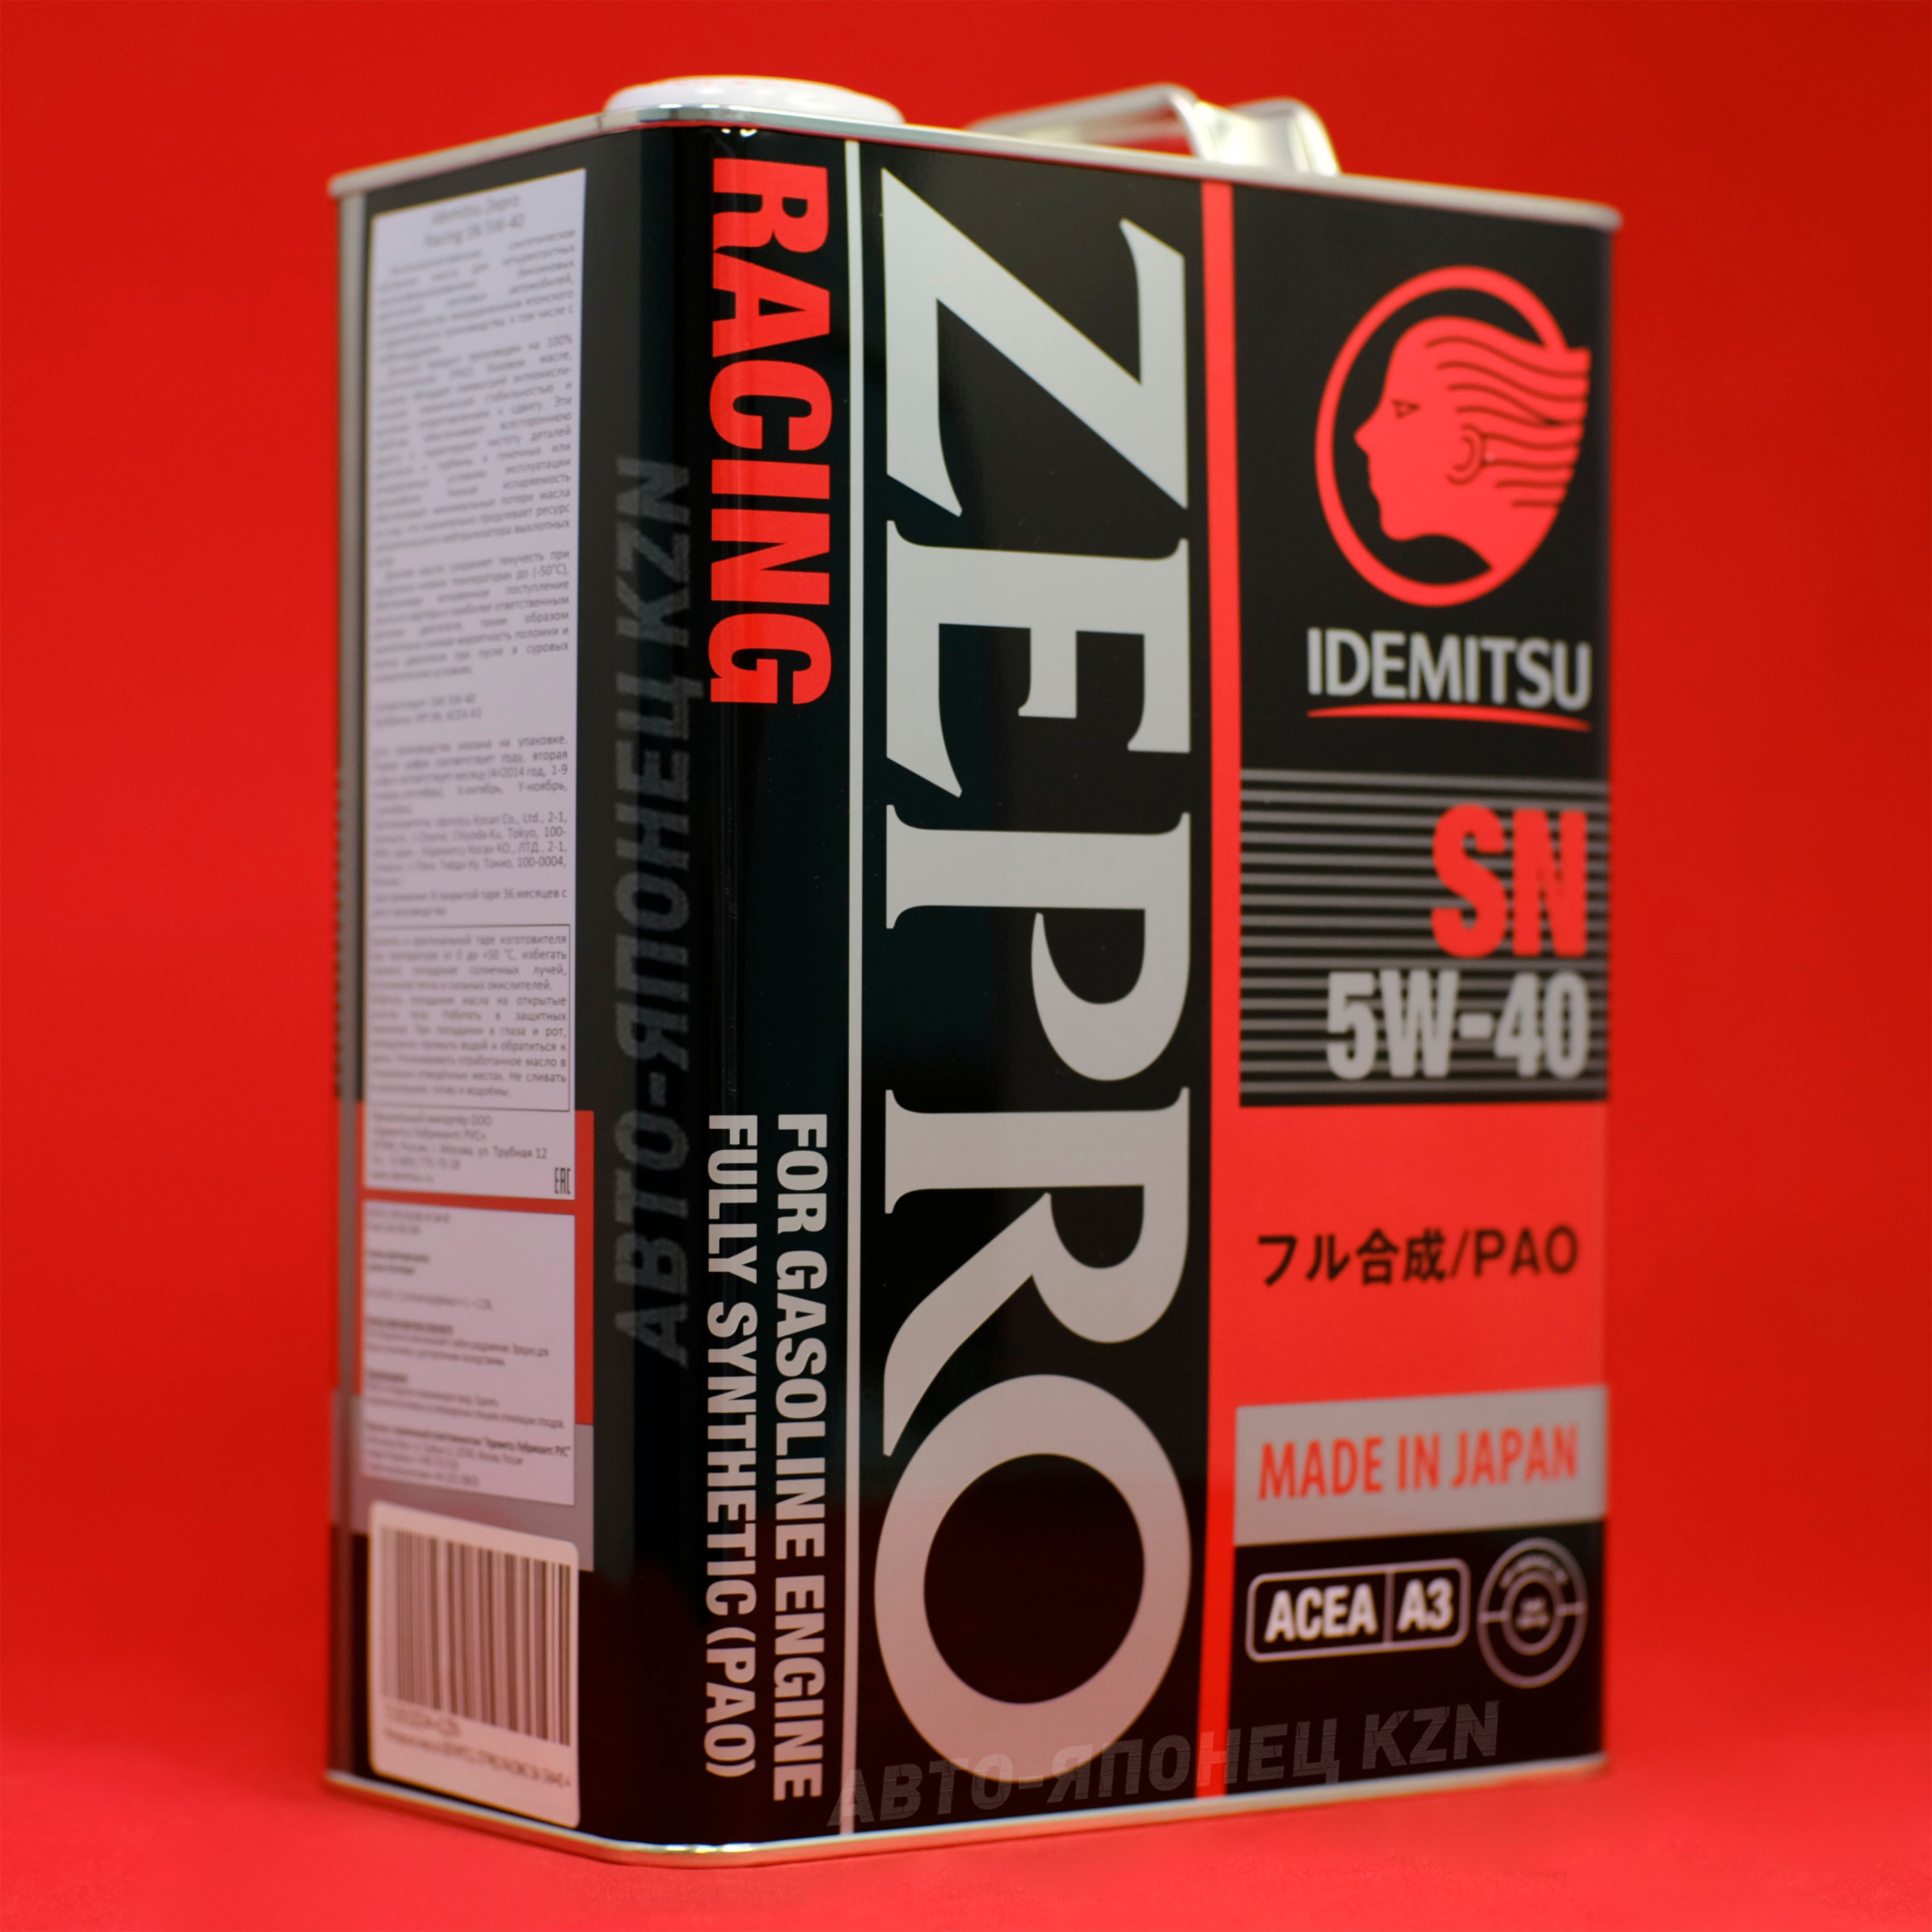 Idemitsu Zepro Euro. Масло зепро 5w40 отзывы. Idemitsu Zepro Euro 5w-40 реклама. Масло идемитсу 5w40 отзывы